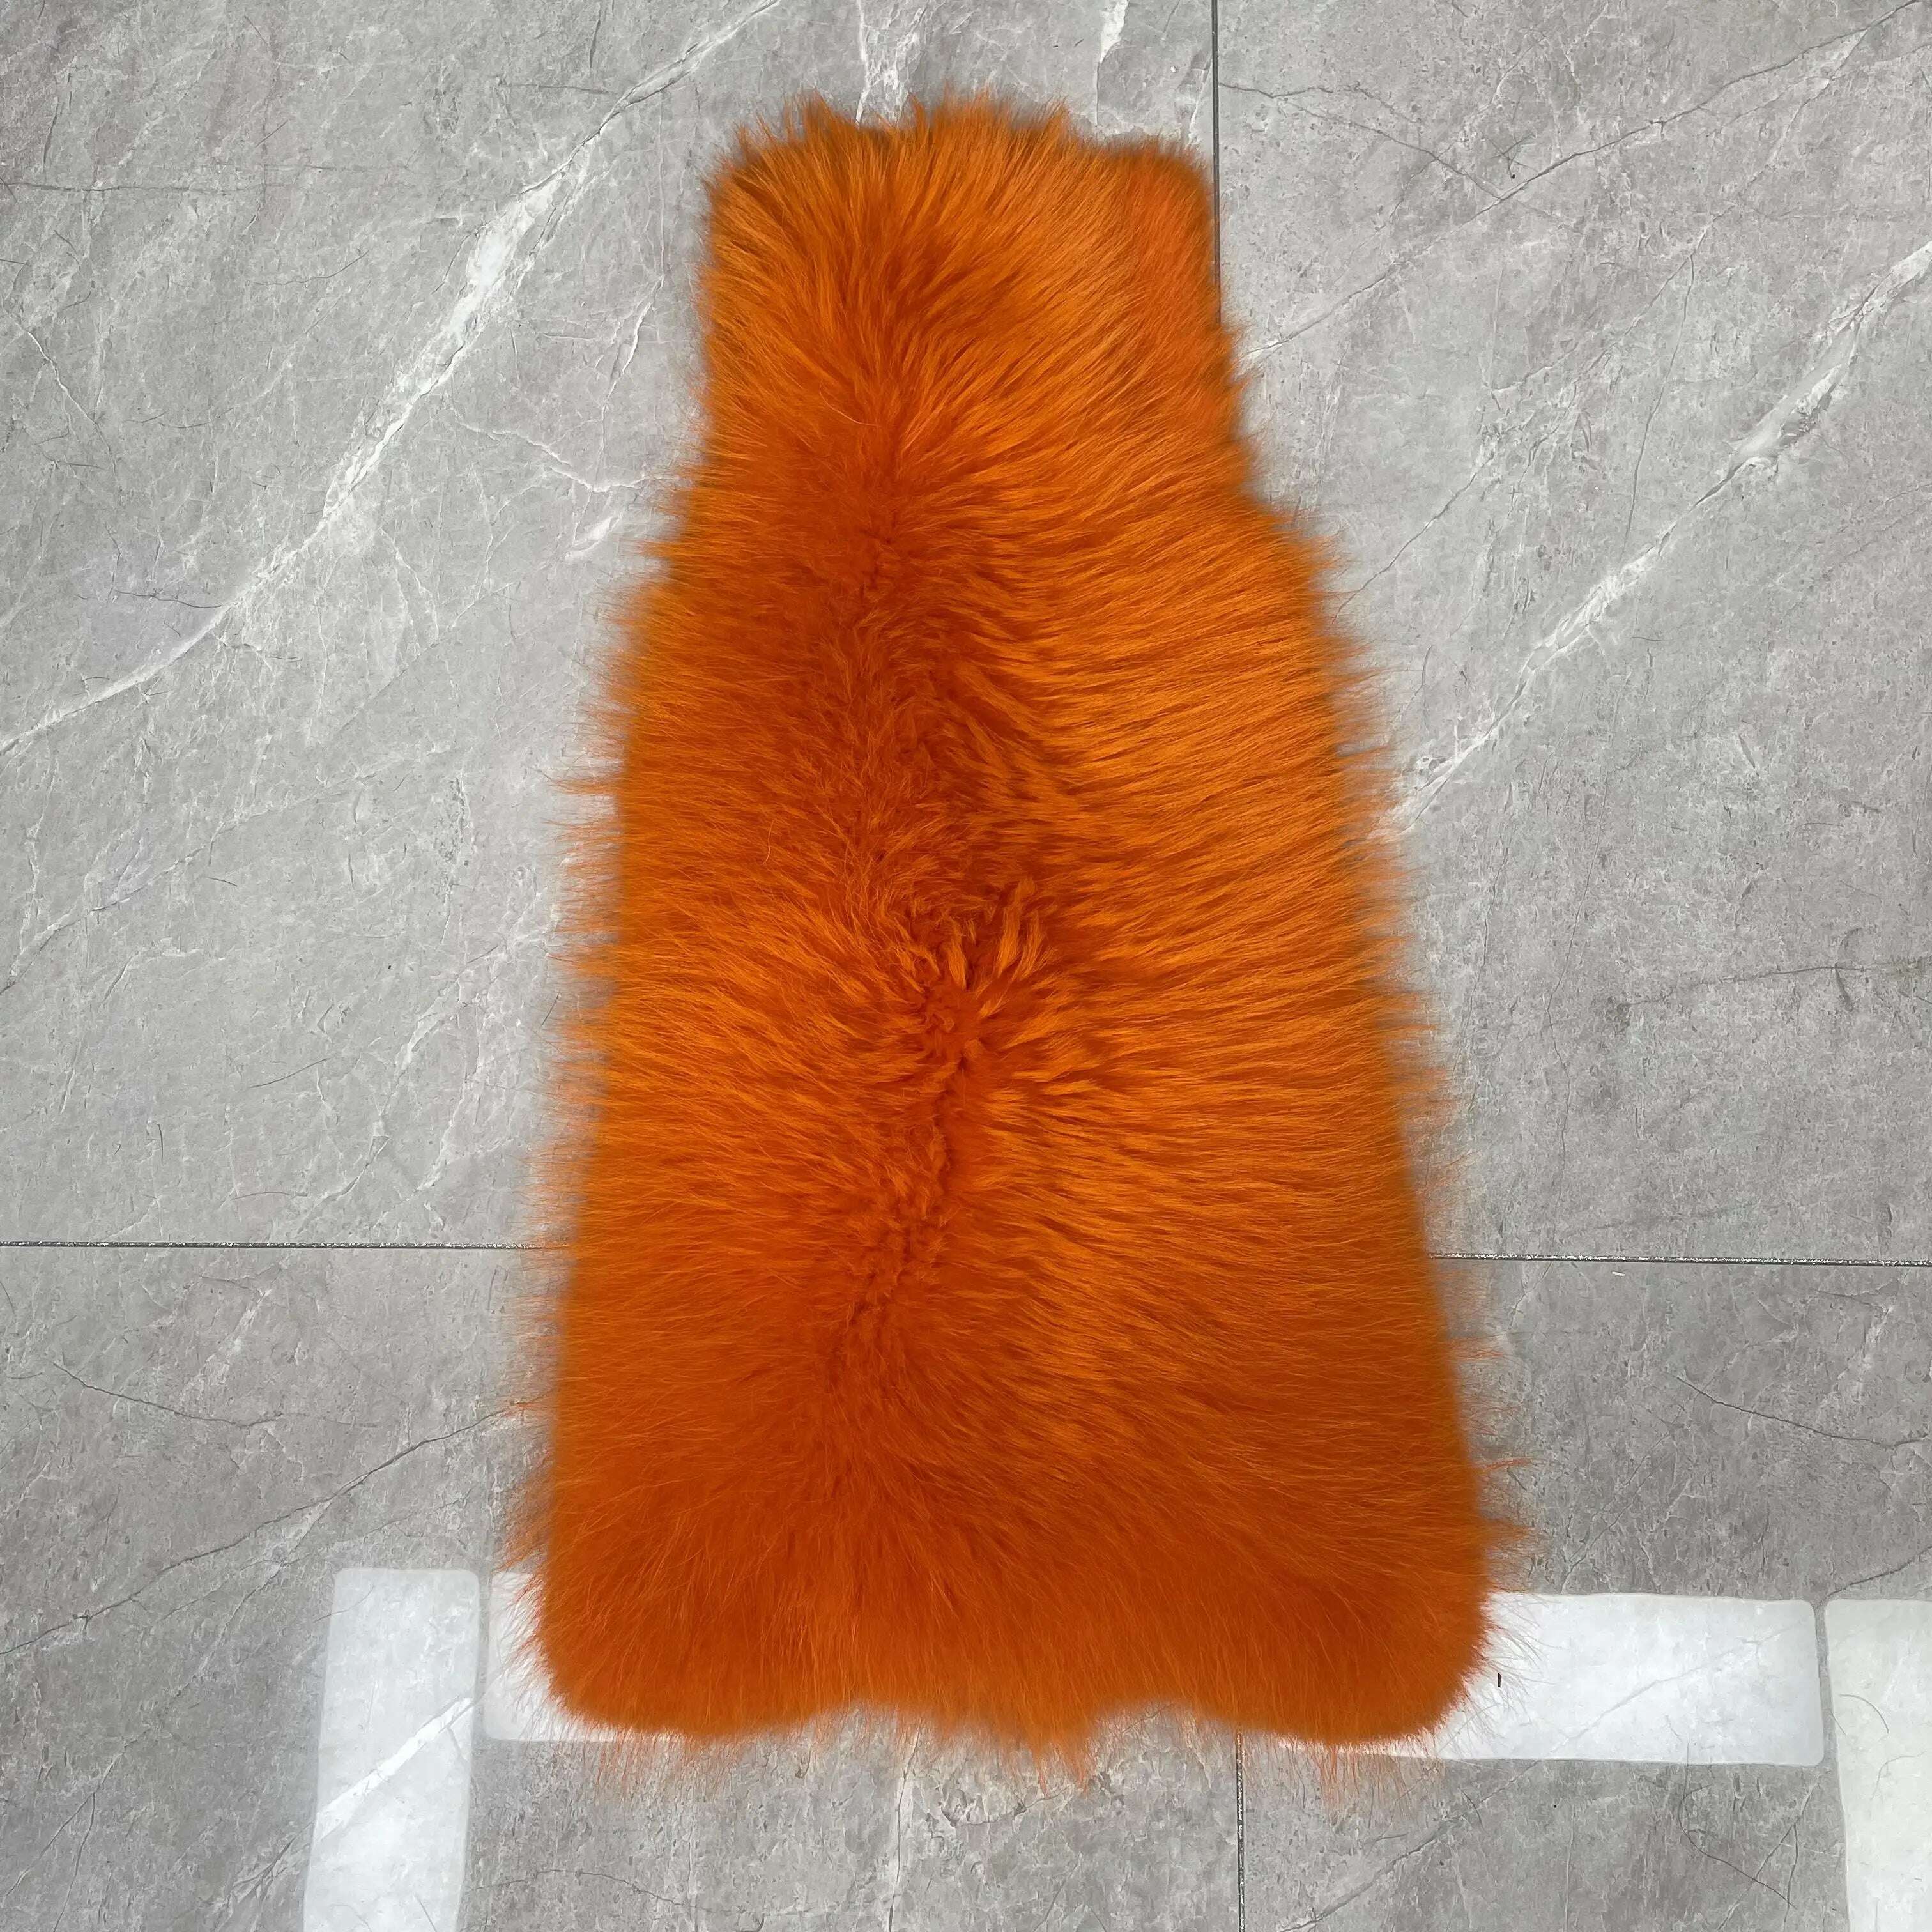 KIMLUD, Real Raccoon Fur Jacket Men Fashion Coat Winter Warm Long Style, Orange / XS(88cm), KIMLUD Womens Clothes